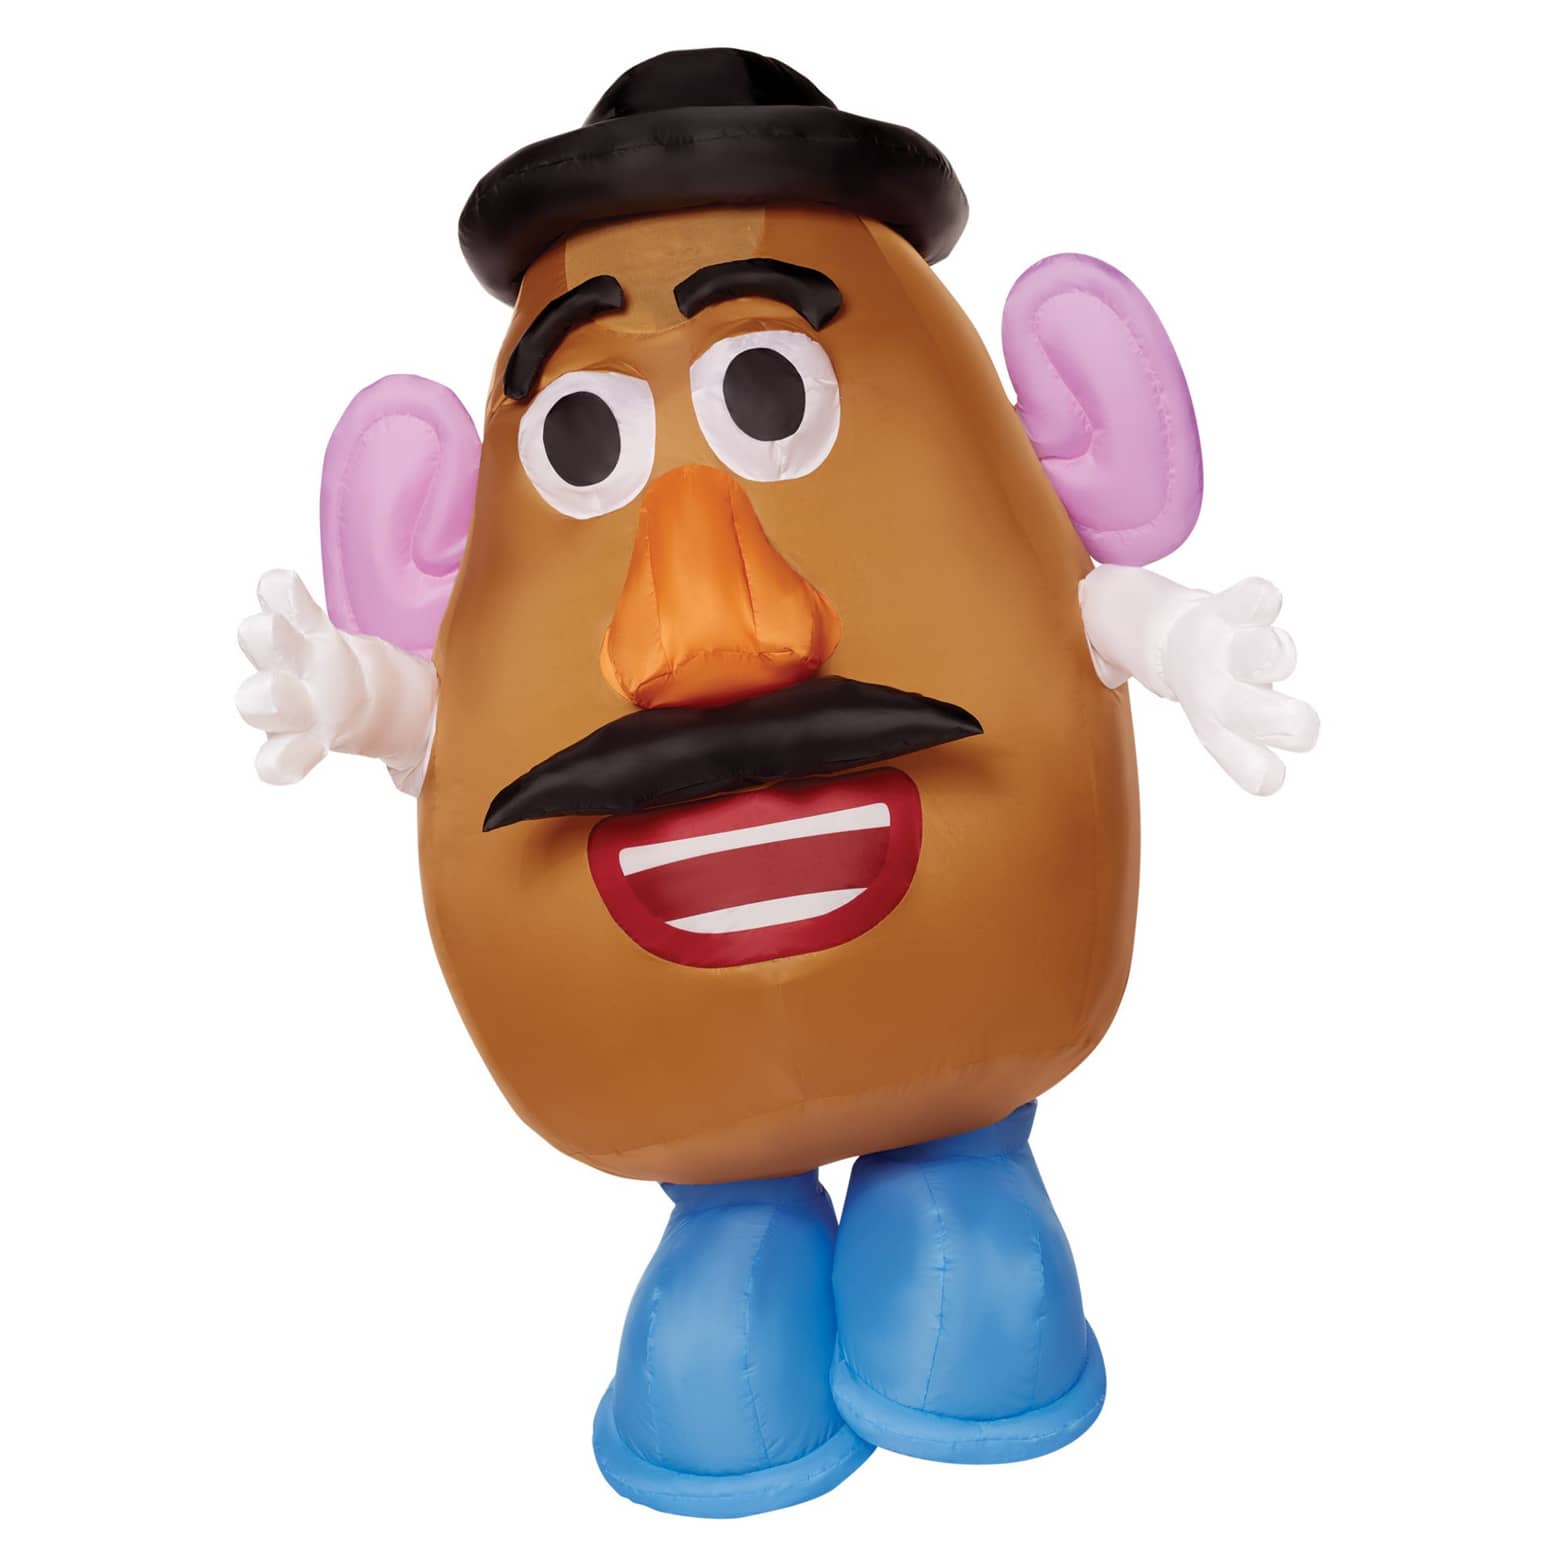 Mr. Potato Head Inflatable Costume